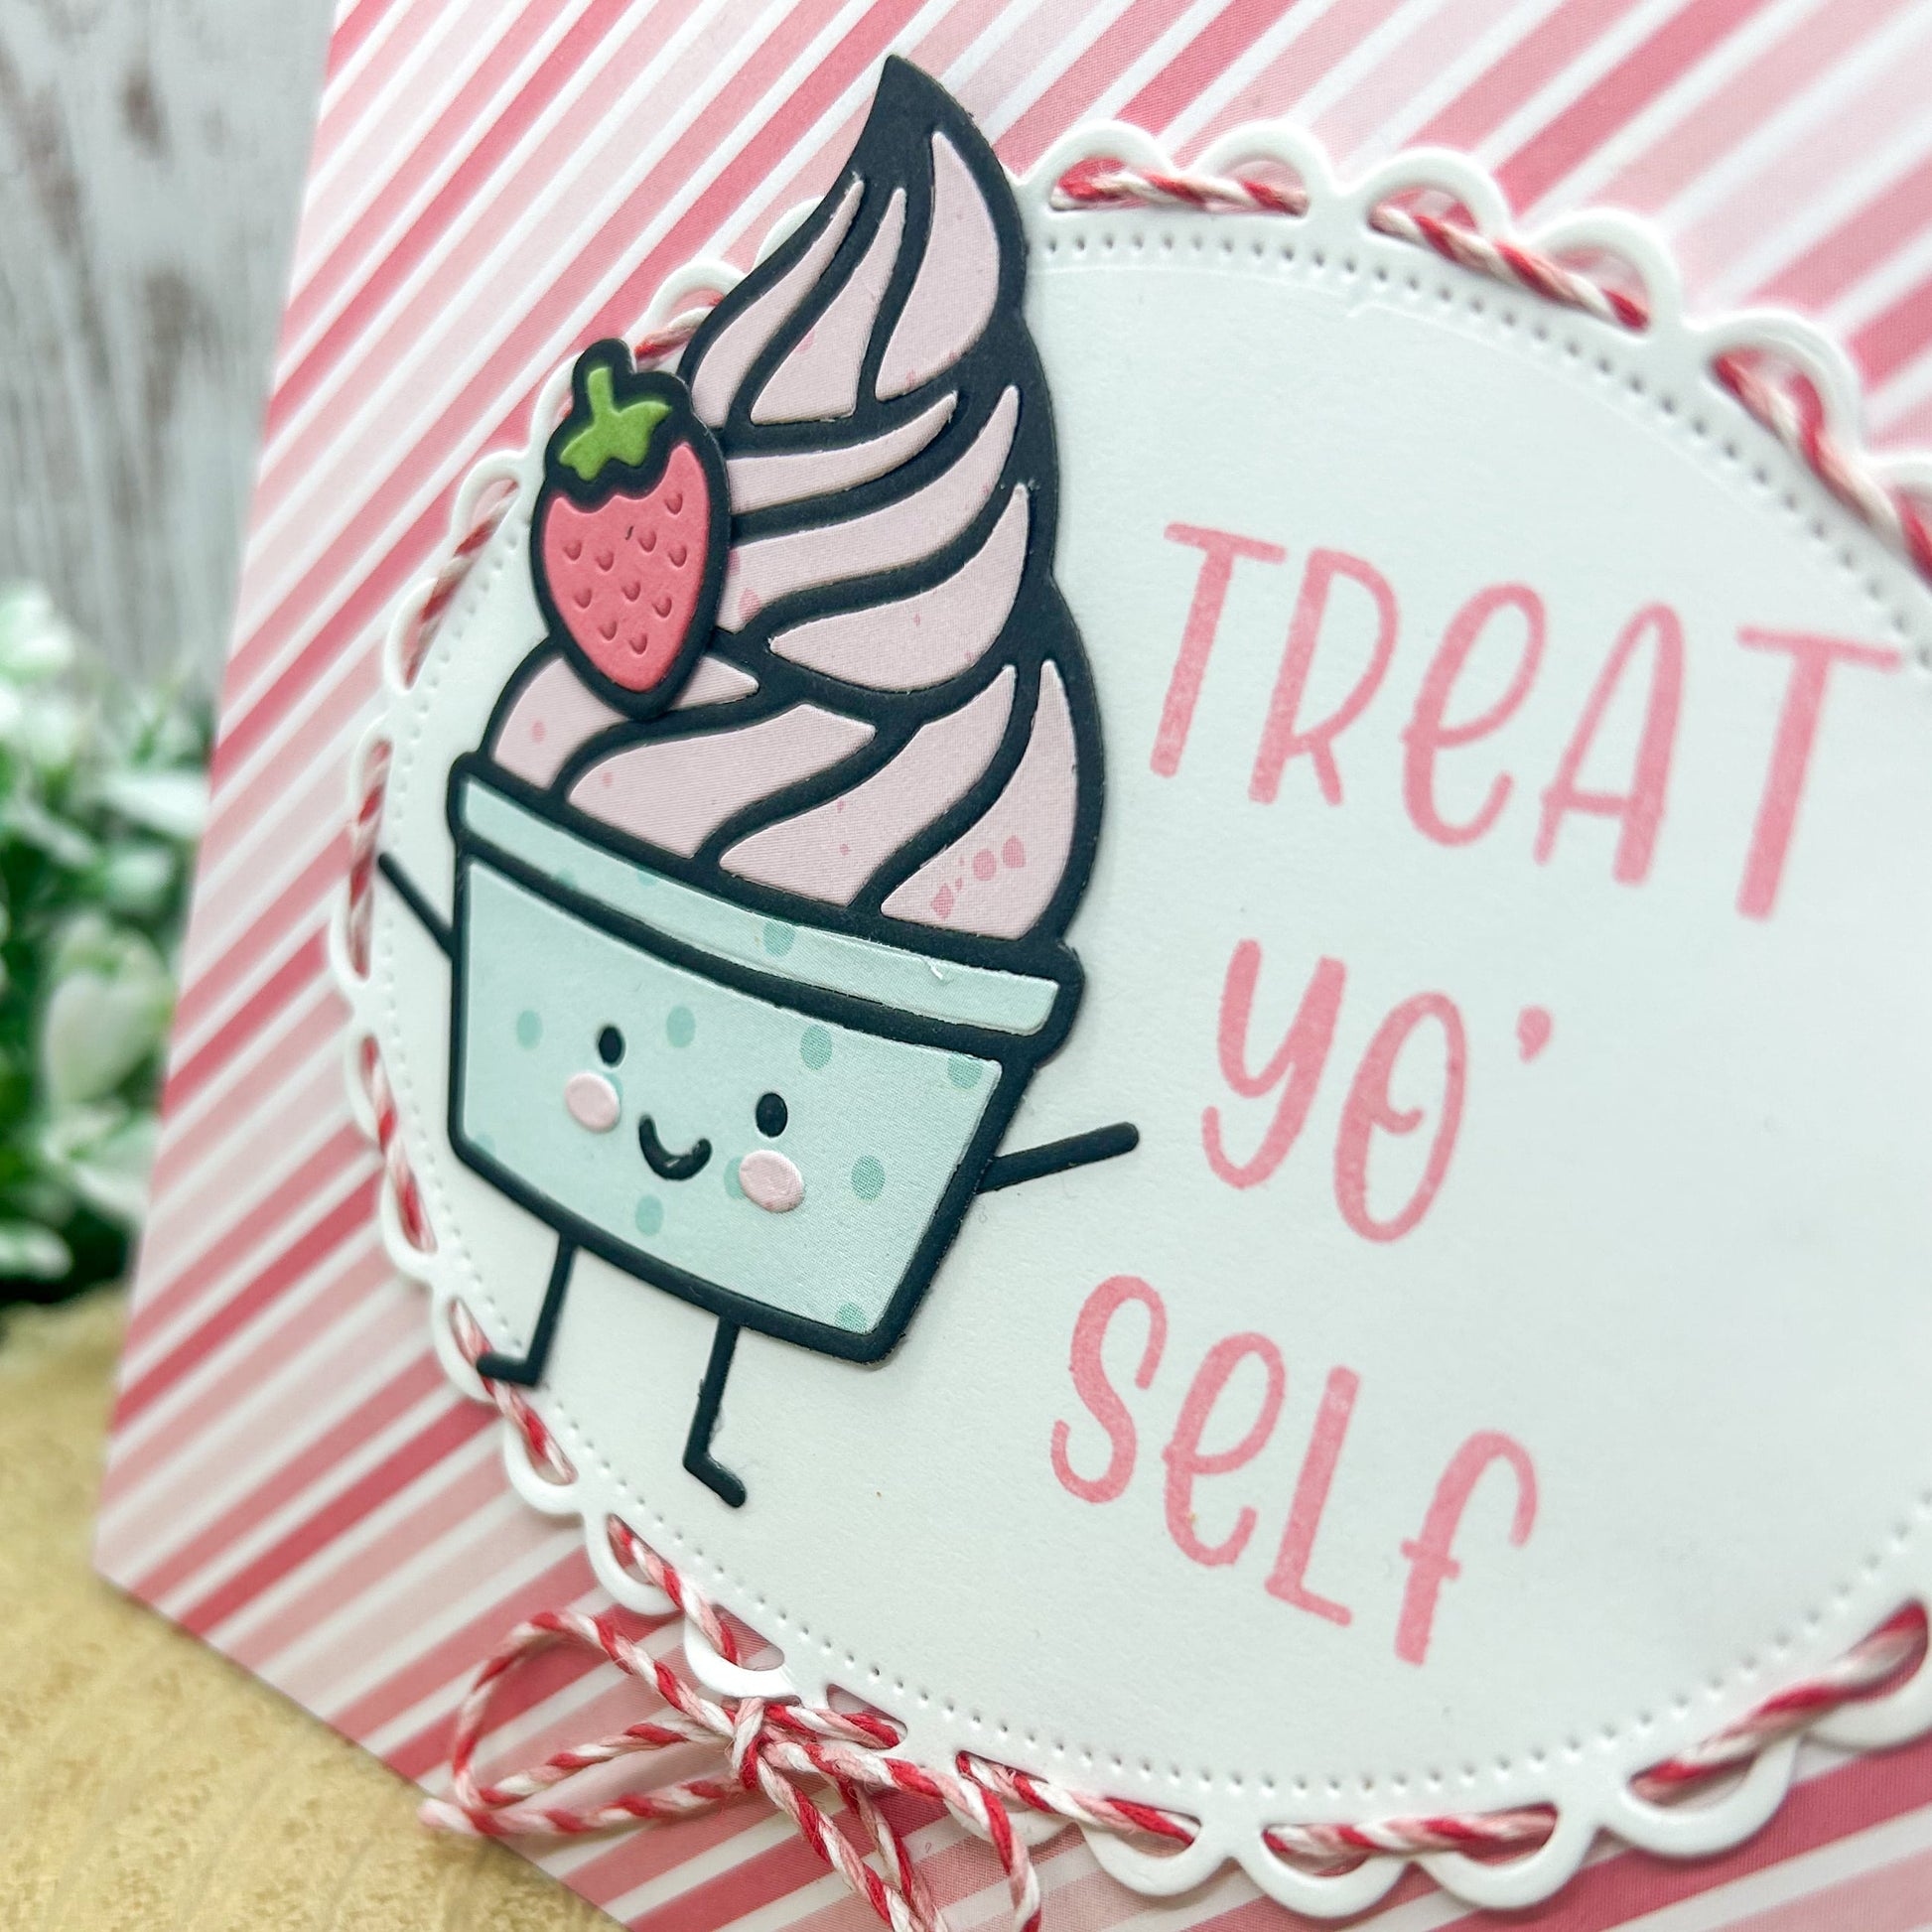 Treat Yo' Self! Handmade Birthday Card-2